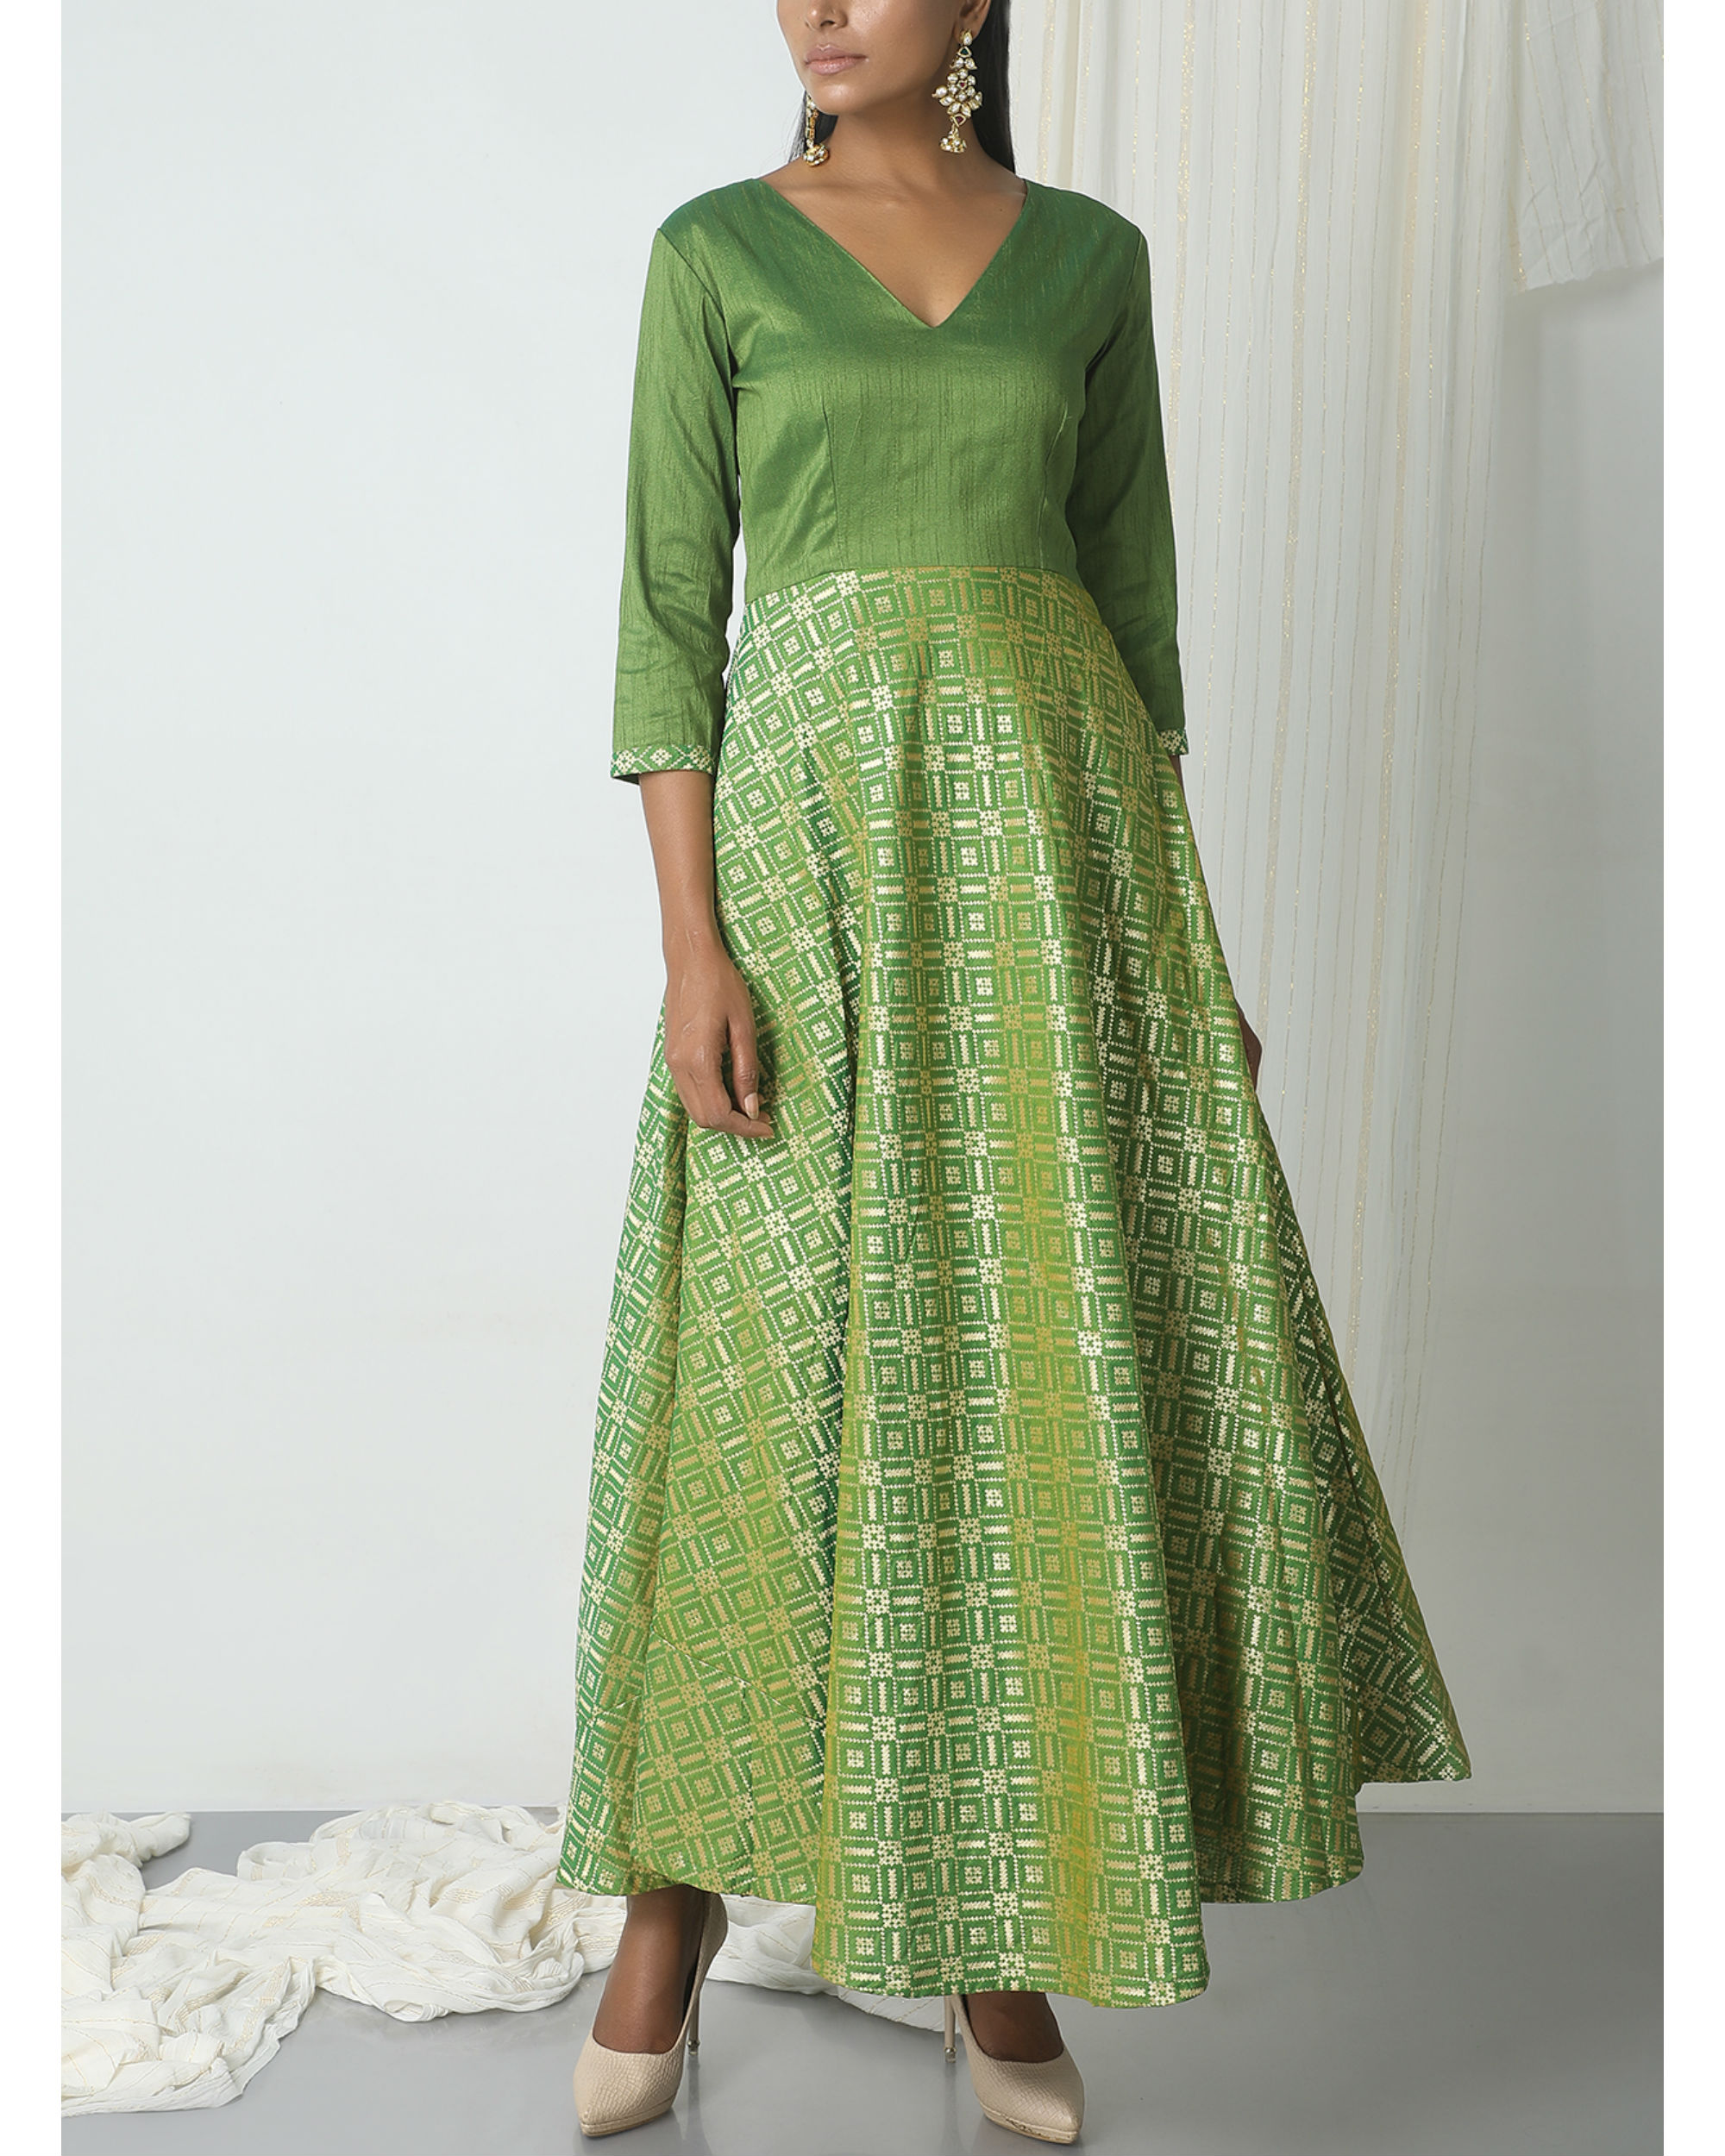 Green grid brocade dress by trueBrowns ...